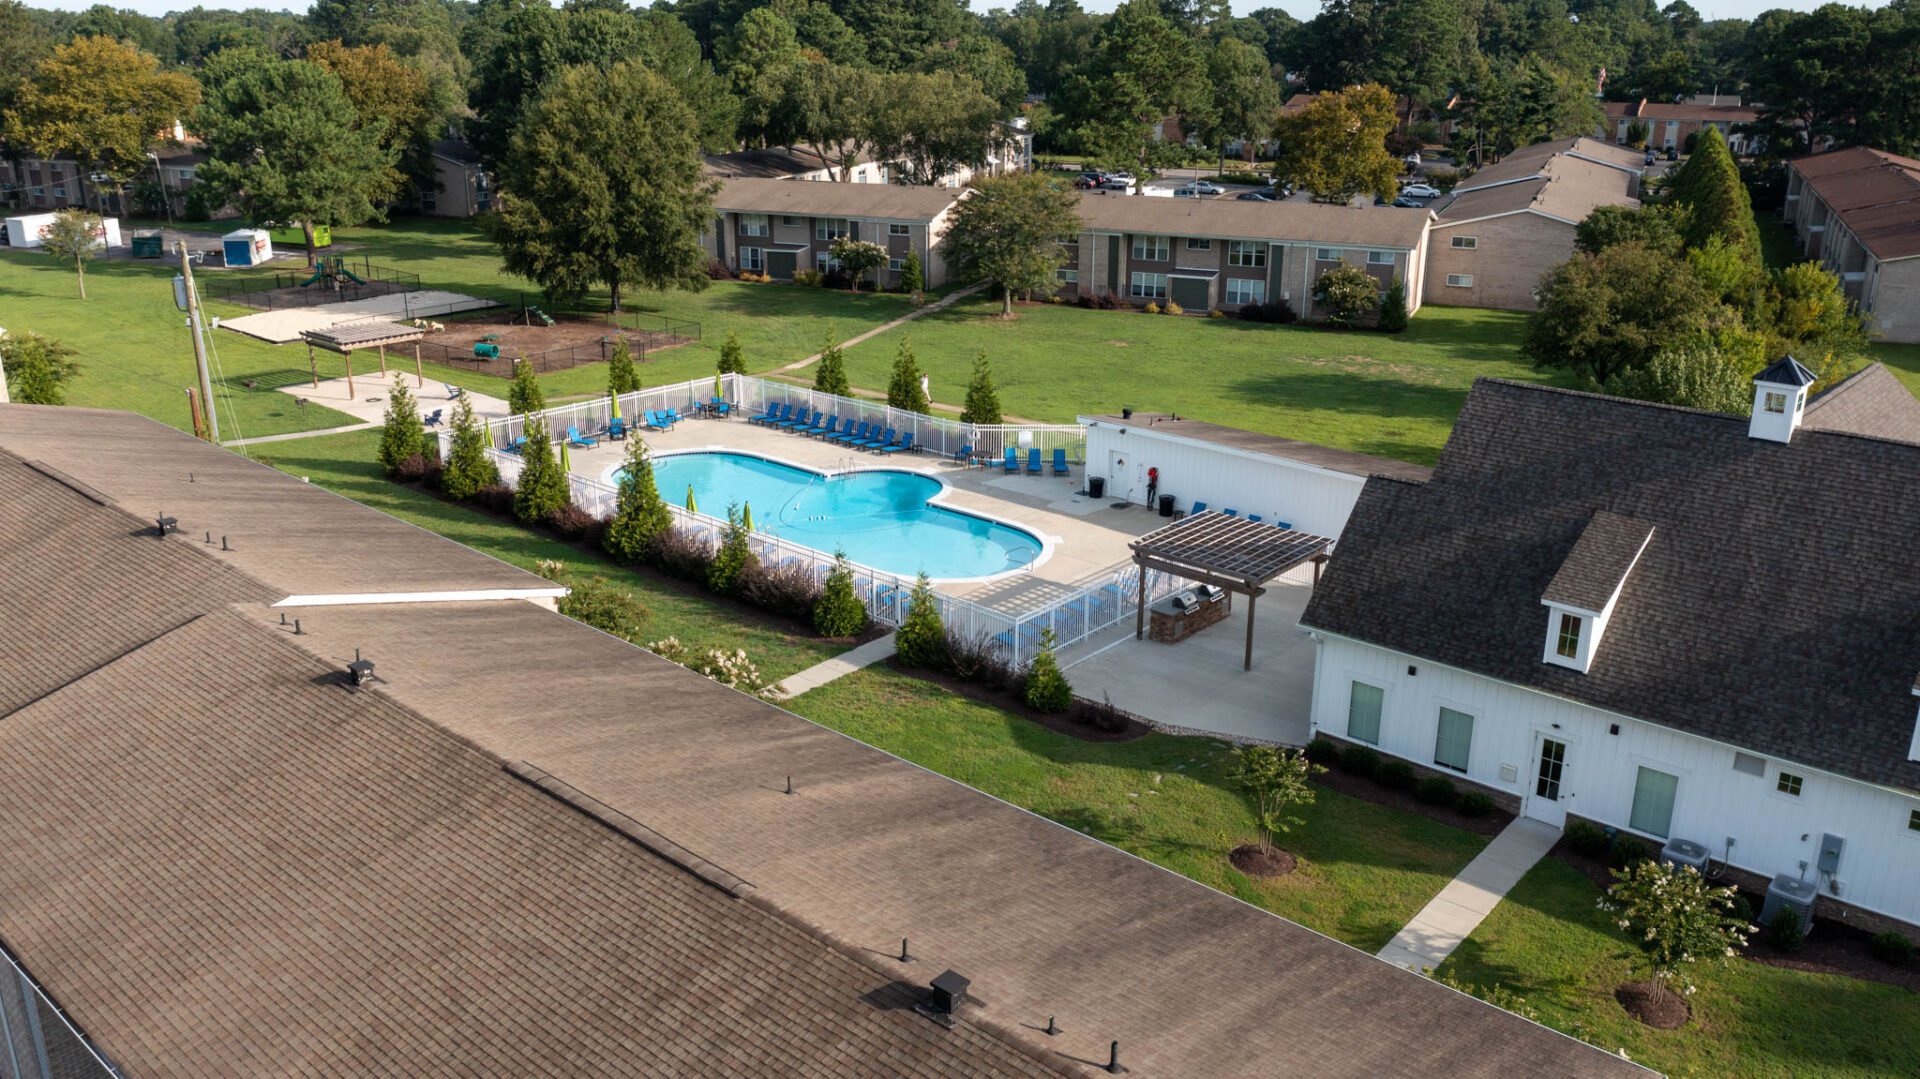 Aerial view of large pool